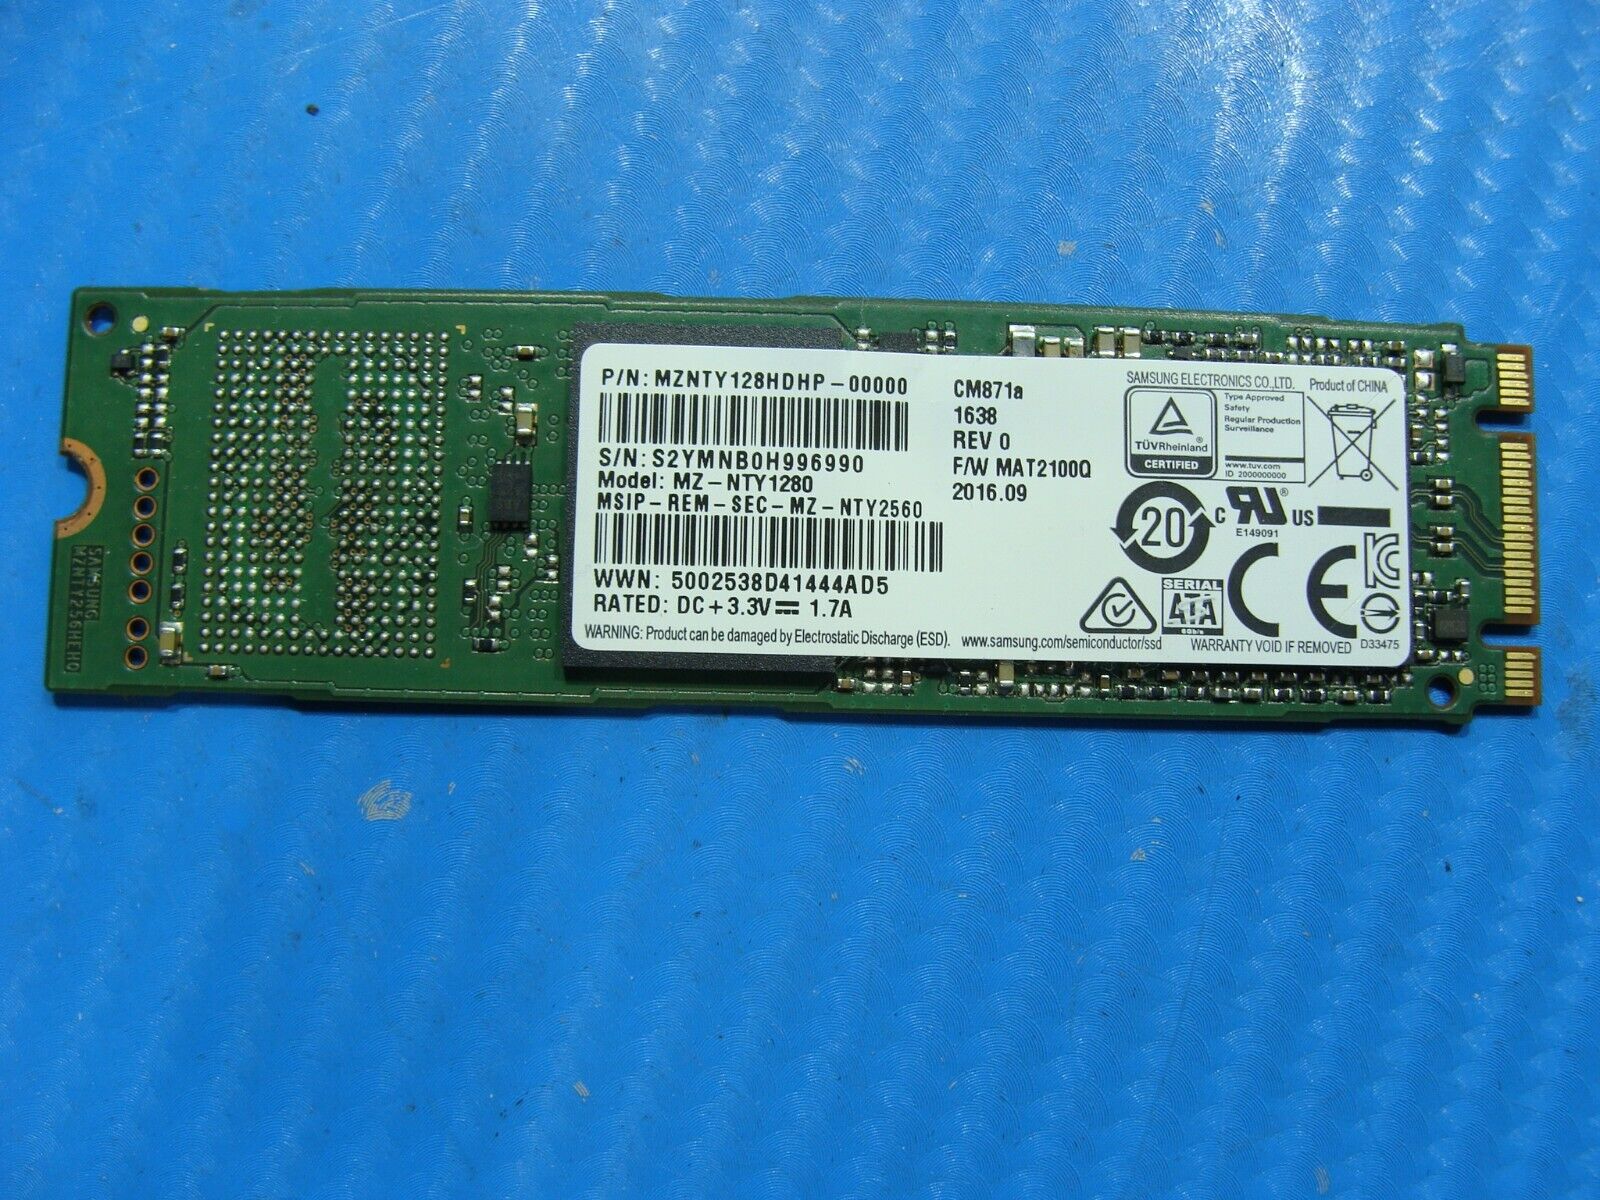 Asus GL702VM-BHI7N09 Samsung 128GB SATA SSD Solid State Drive MZNTY128HDHP-00000